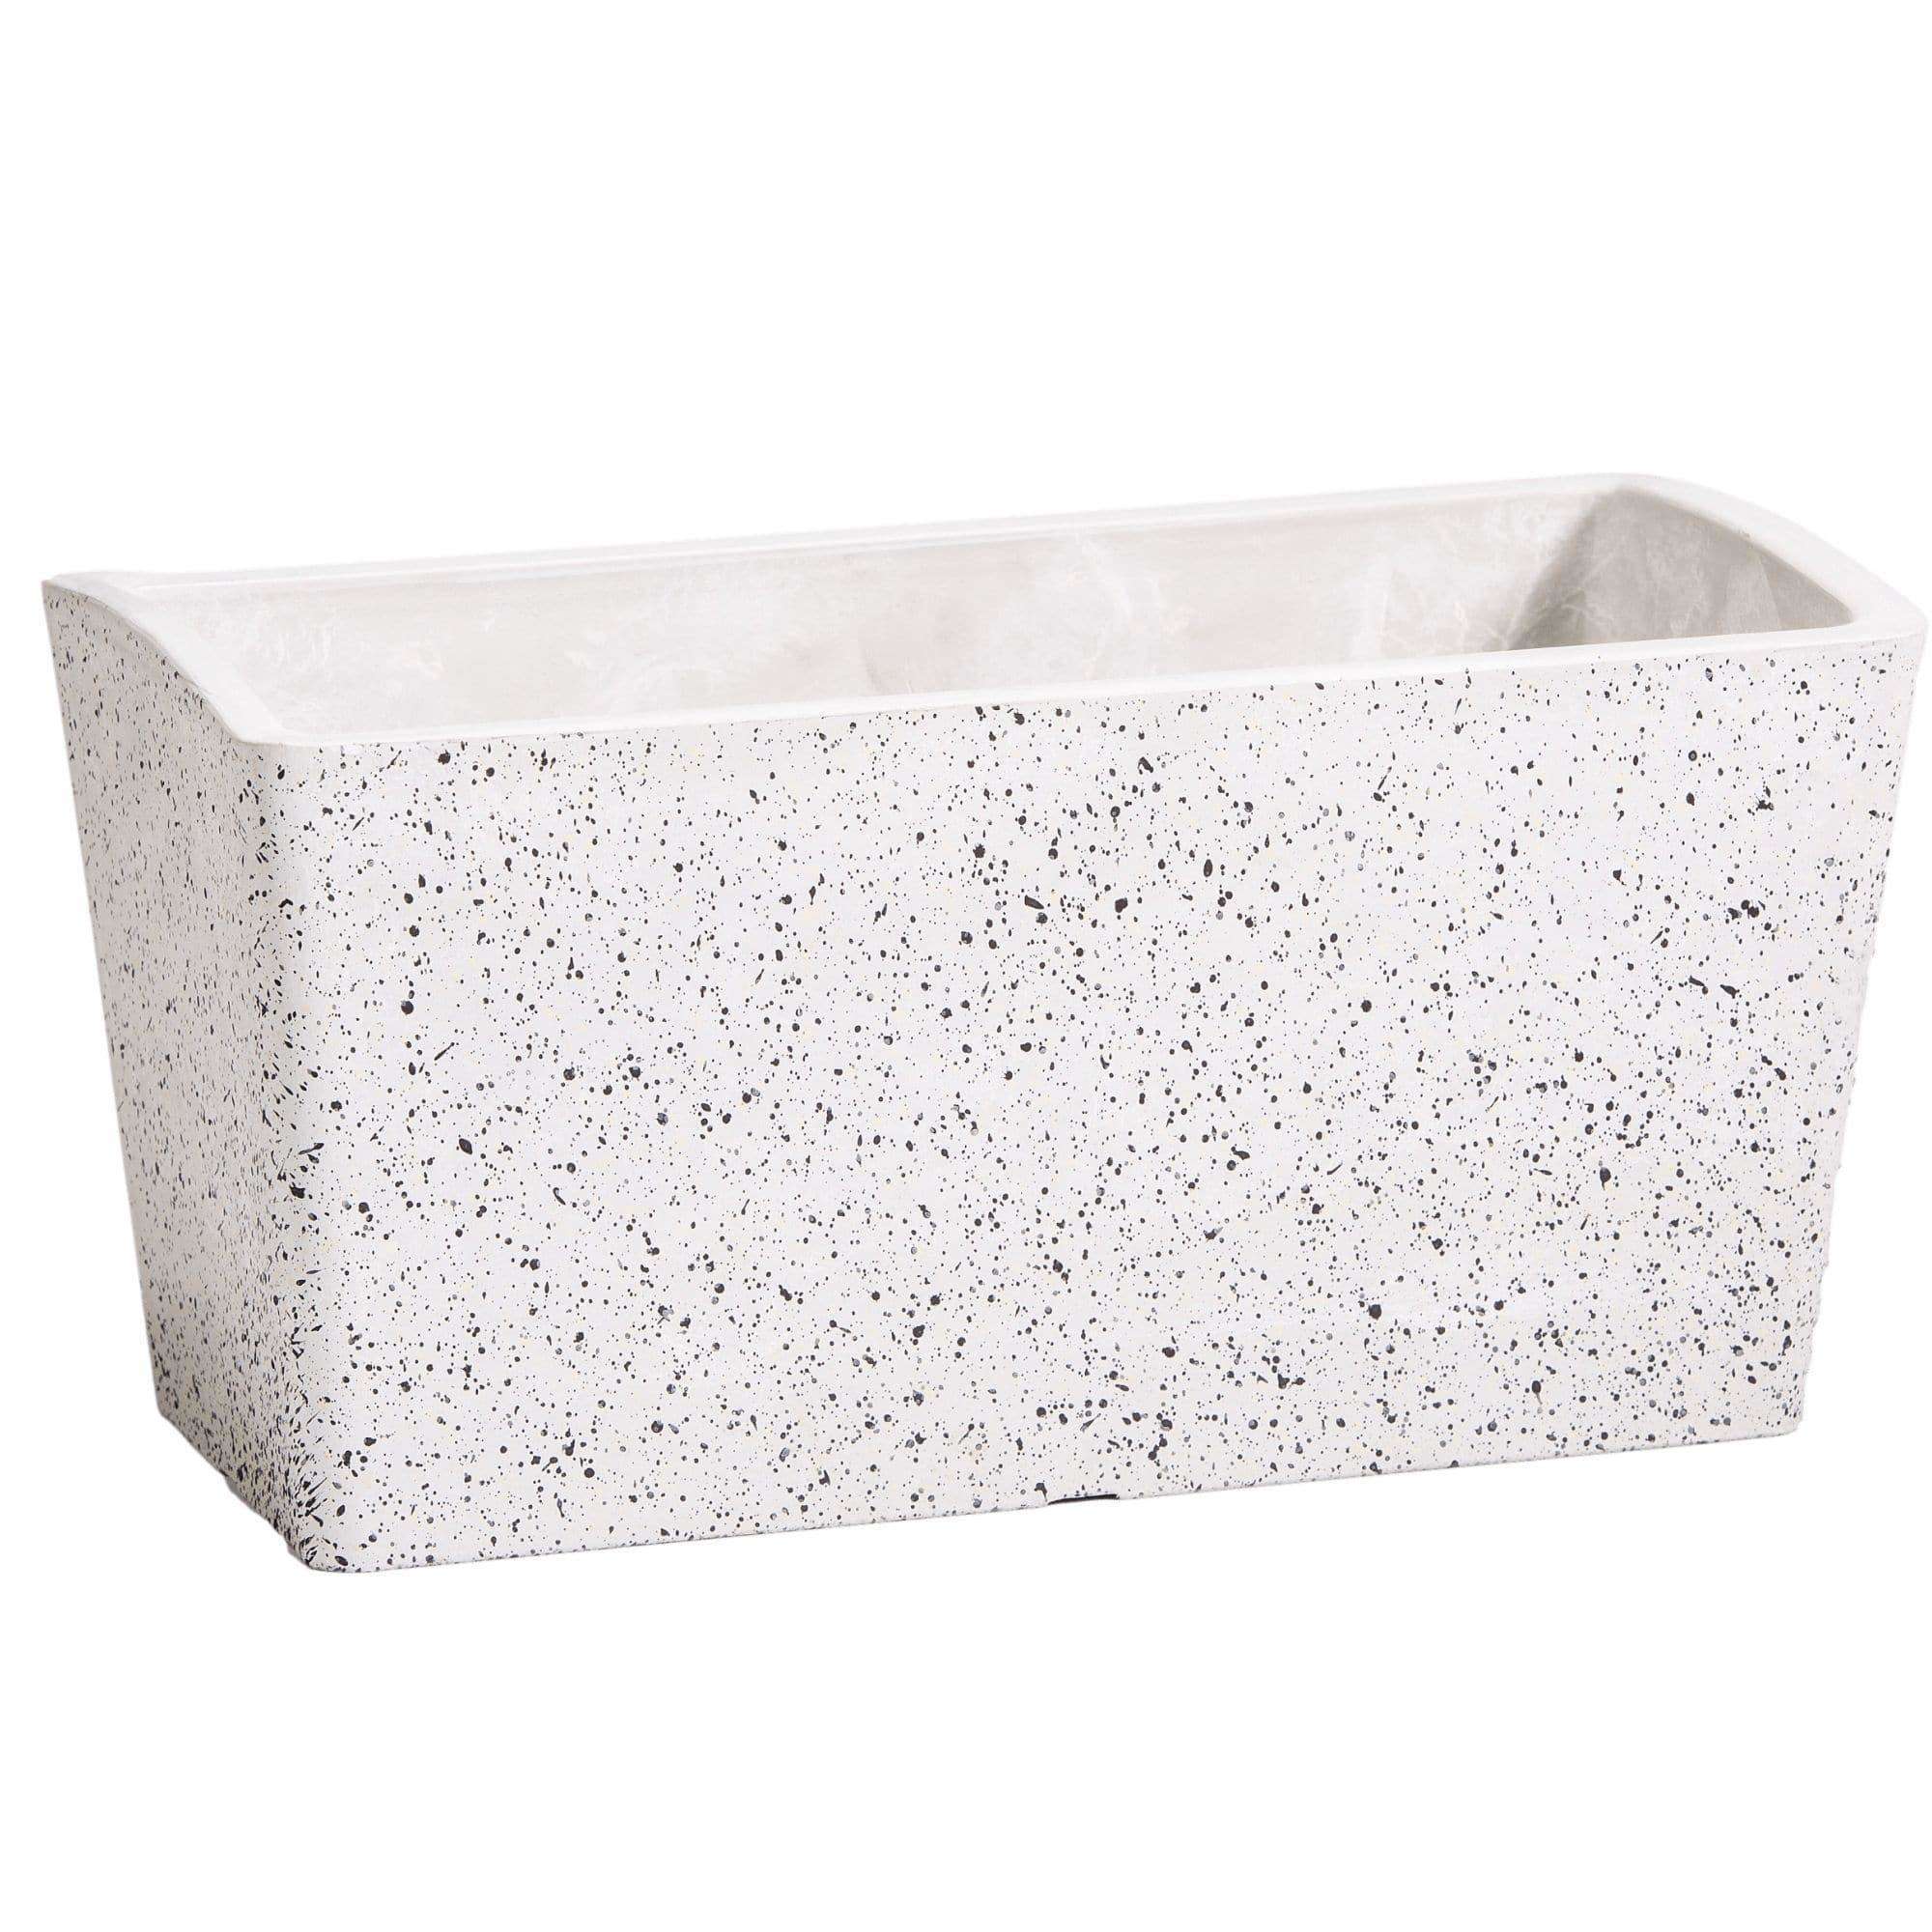 imitation-stone-concrete-white-stone-rectangle-planter-50cm-559219.jpg